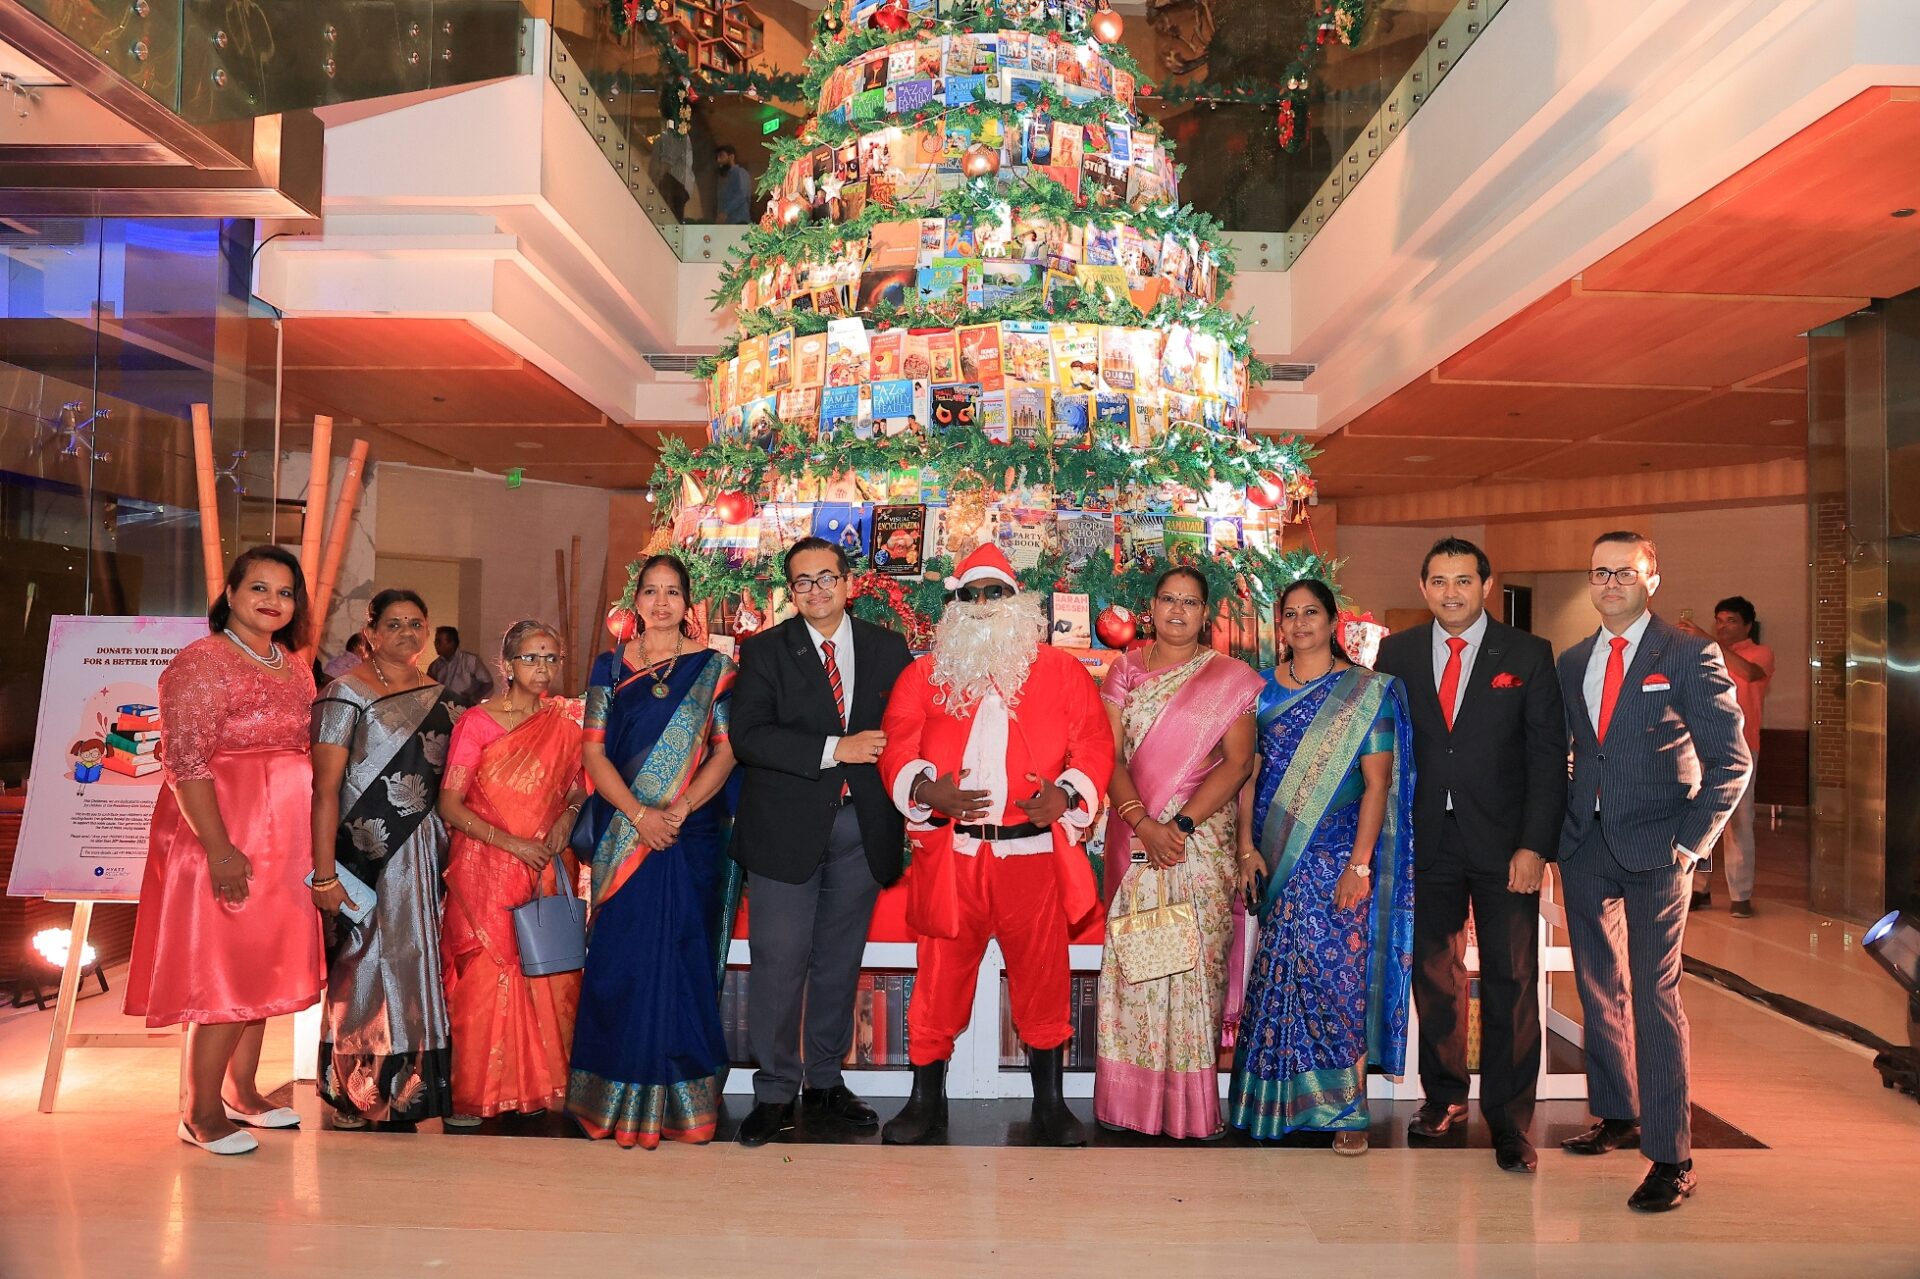 Christmas Tree Lighting Ceremony took place at Hyatt Regency Chennai